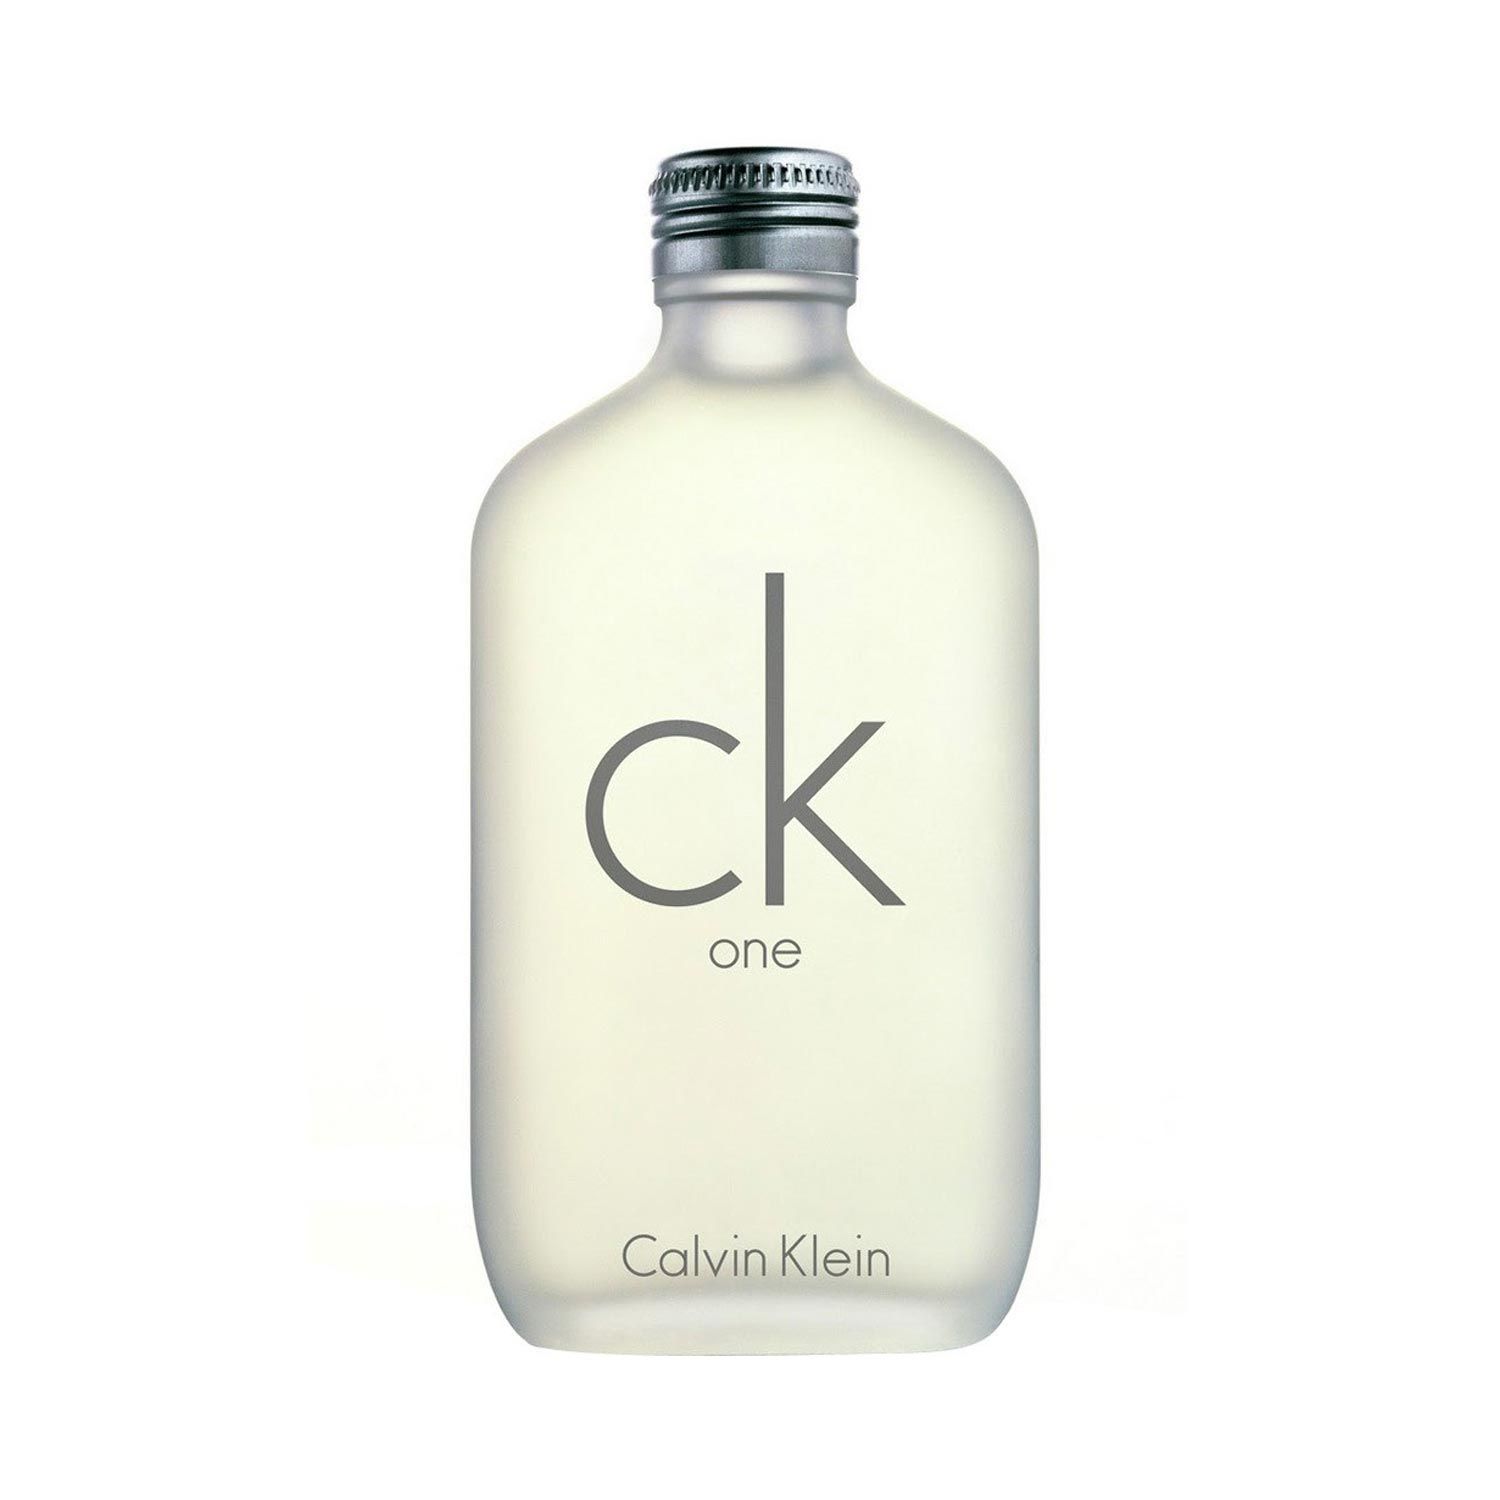 Buy CK One by Calvin Klein for Unisex EDT 200mL | Arablly.com